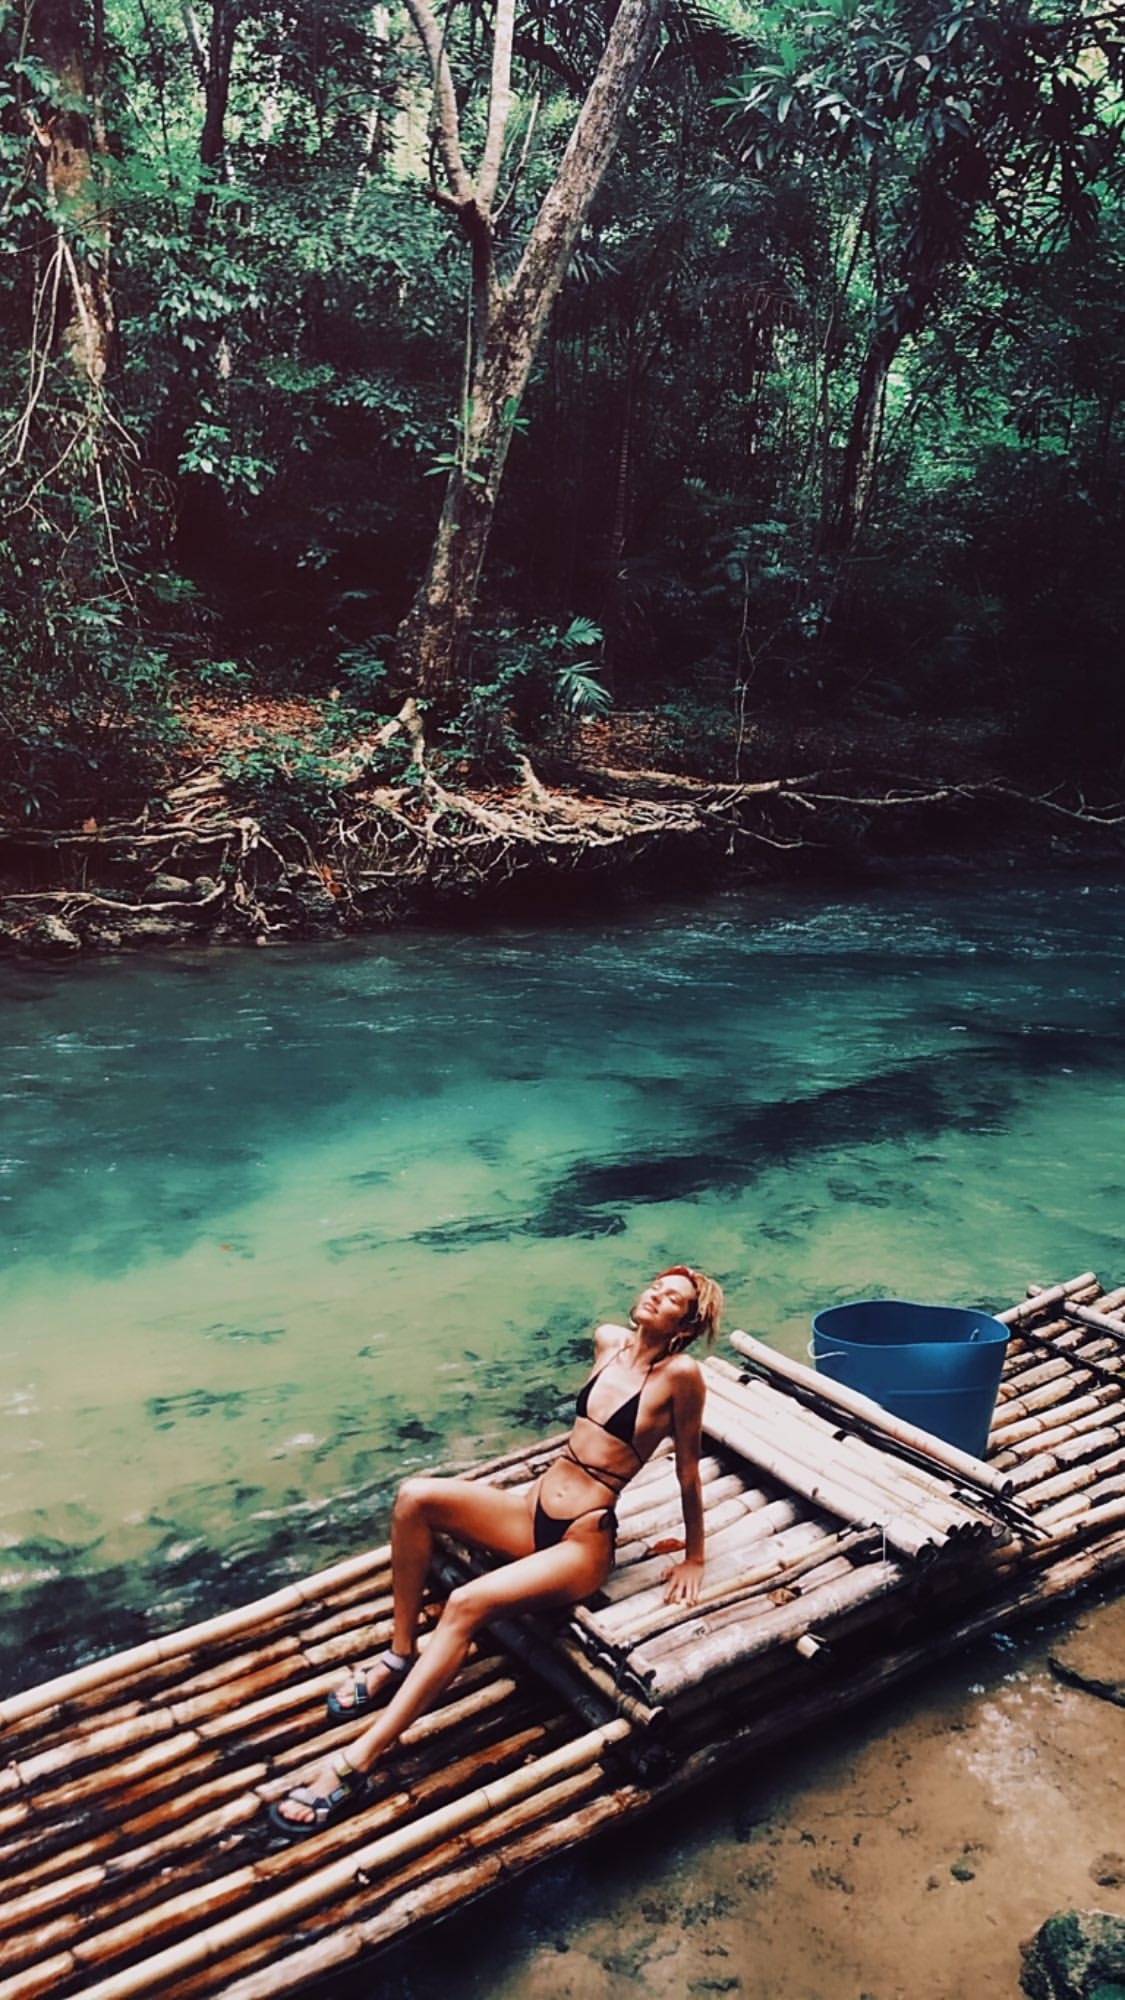 Candice Swanepoel â€“ Instagram and social media